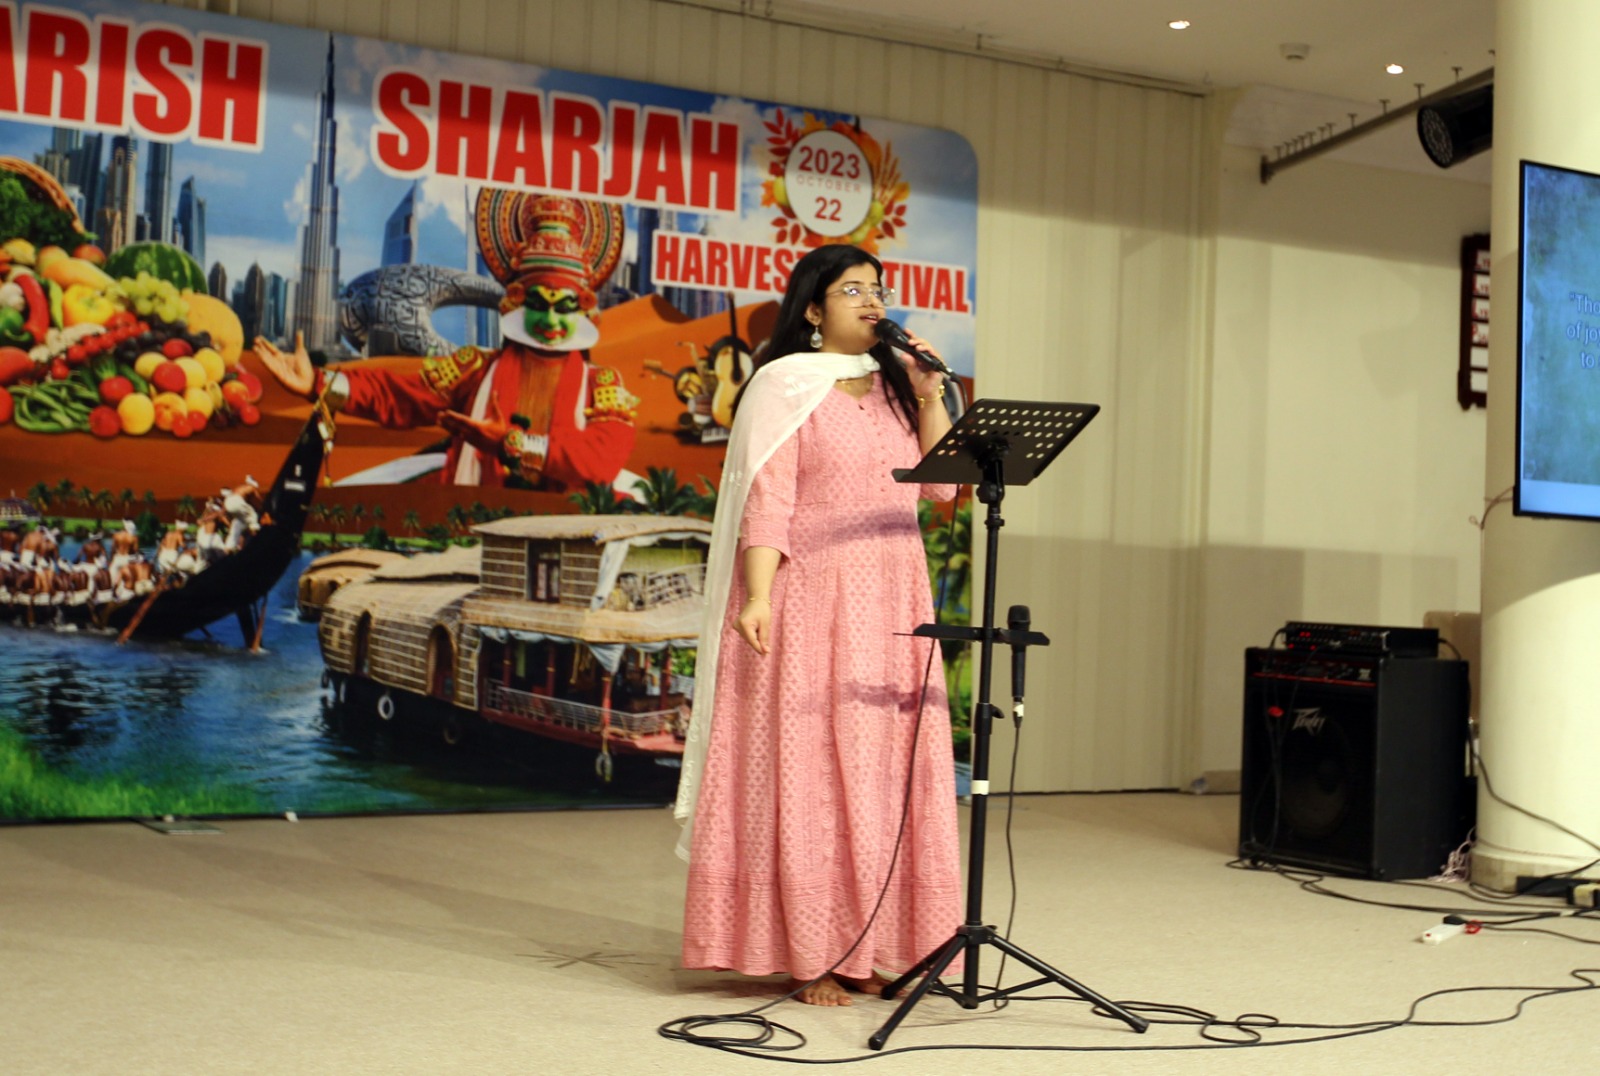 Cultural events_Harvest Festival 2023_CSI Parish Sharjah (